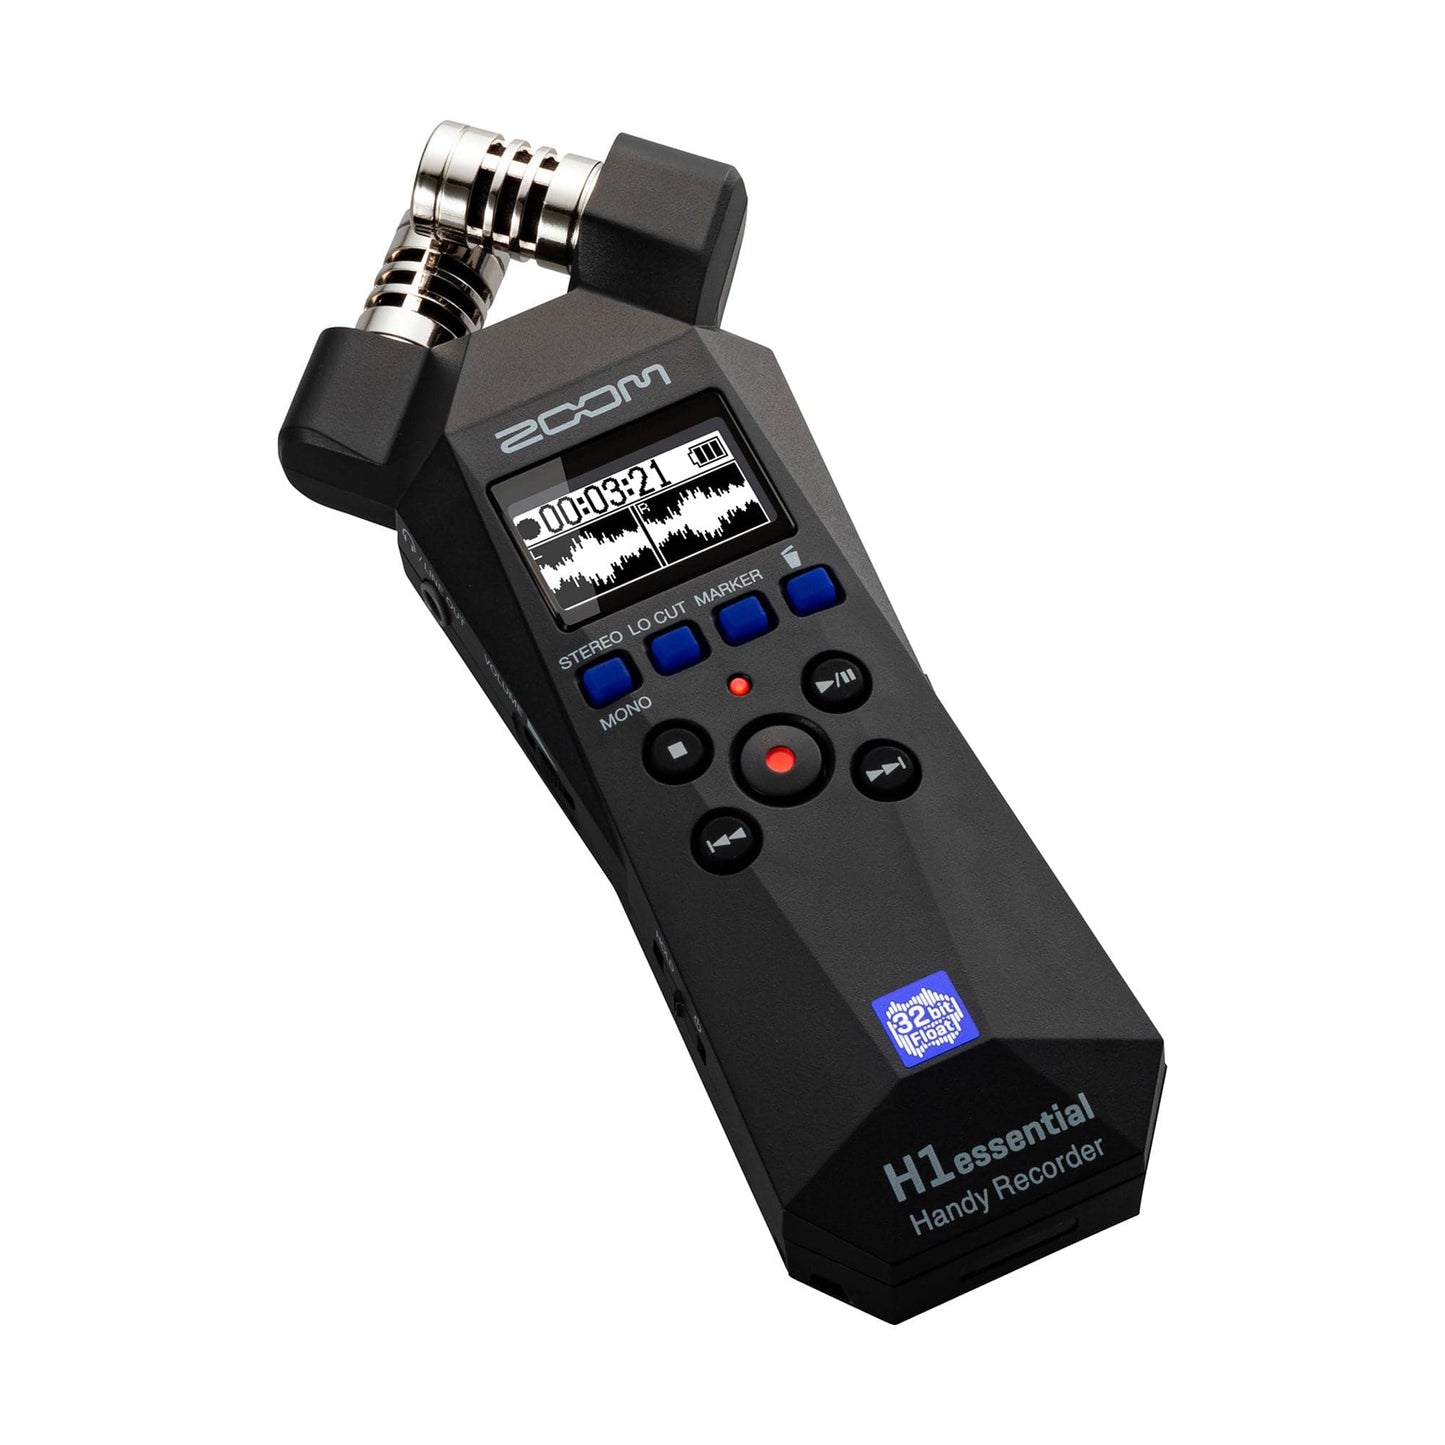 Zoom H1essential Handy Recorder Pro Audio / Recording